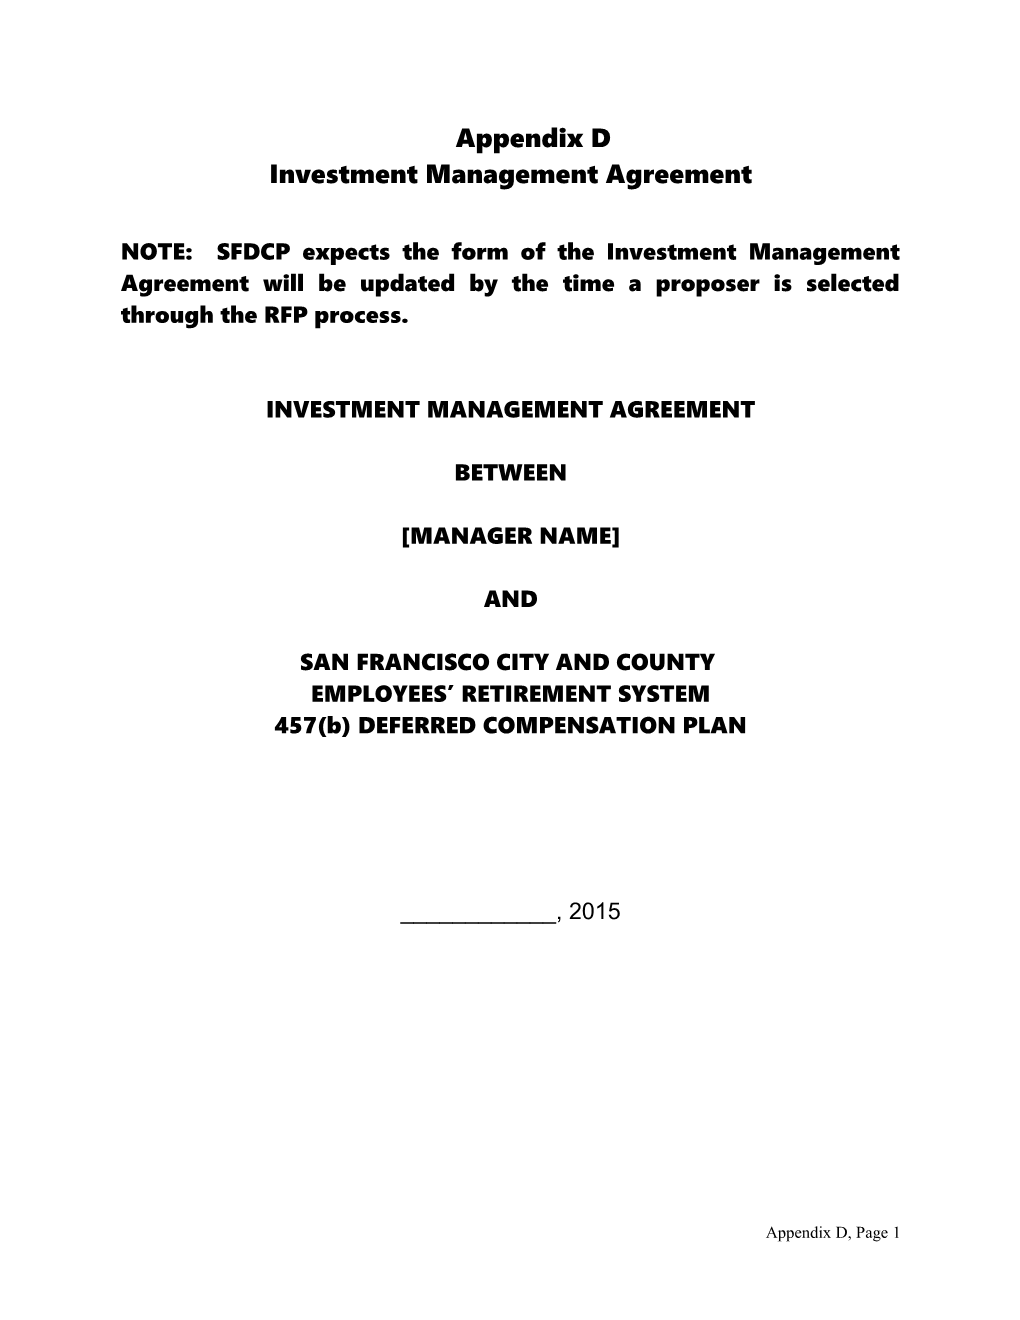 Investment Management Agreement